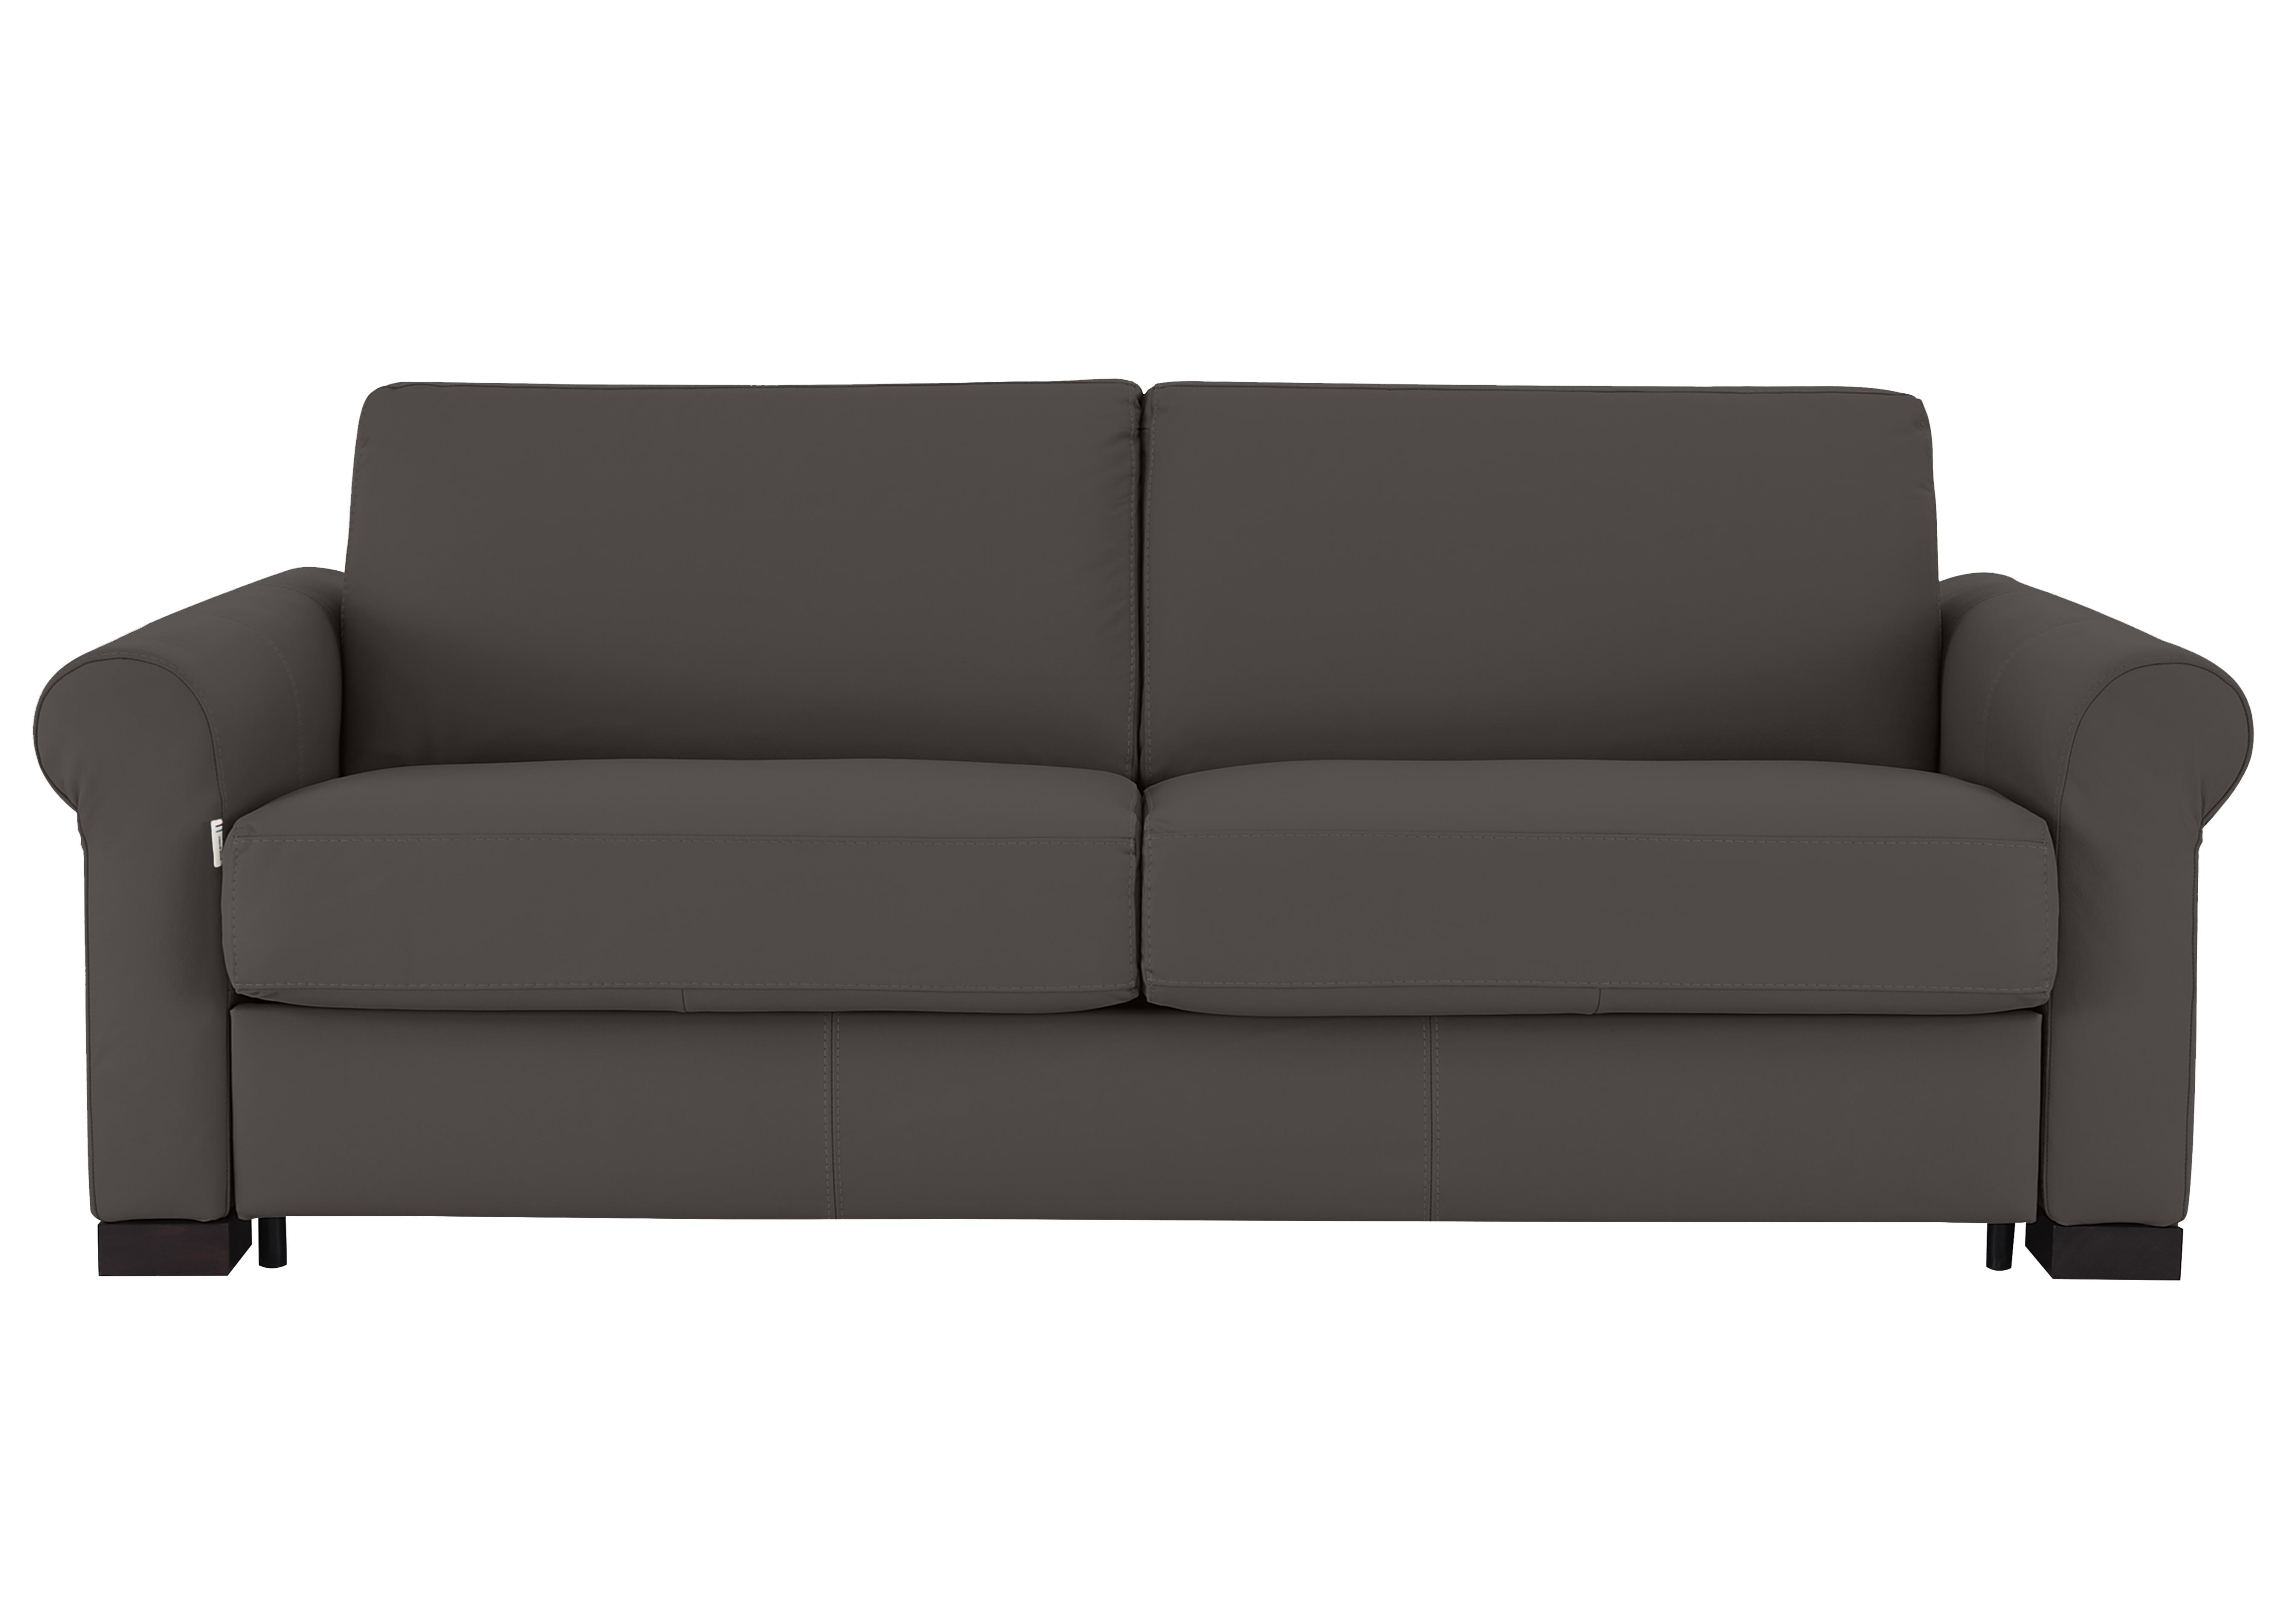 Alcova 3 Seater Leather Sofa Bed with Scroll Arms in Torello Grigio Scuro 327 on Furniture Village